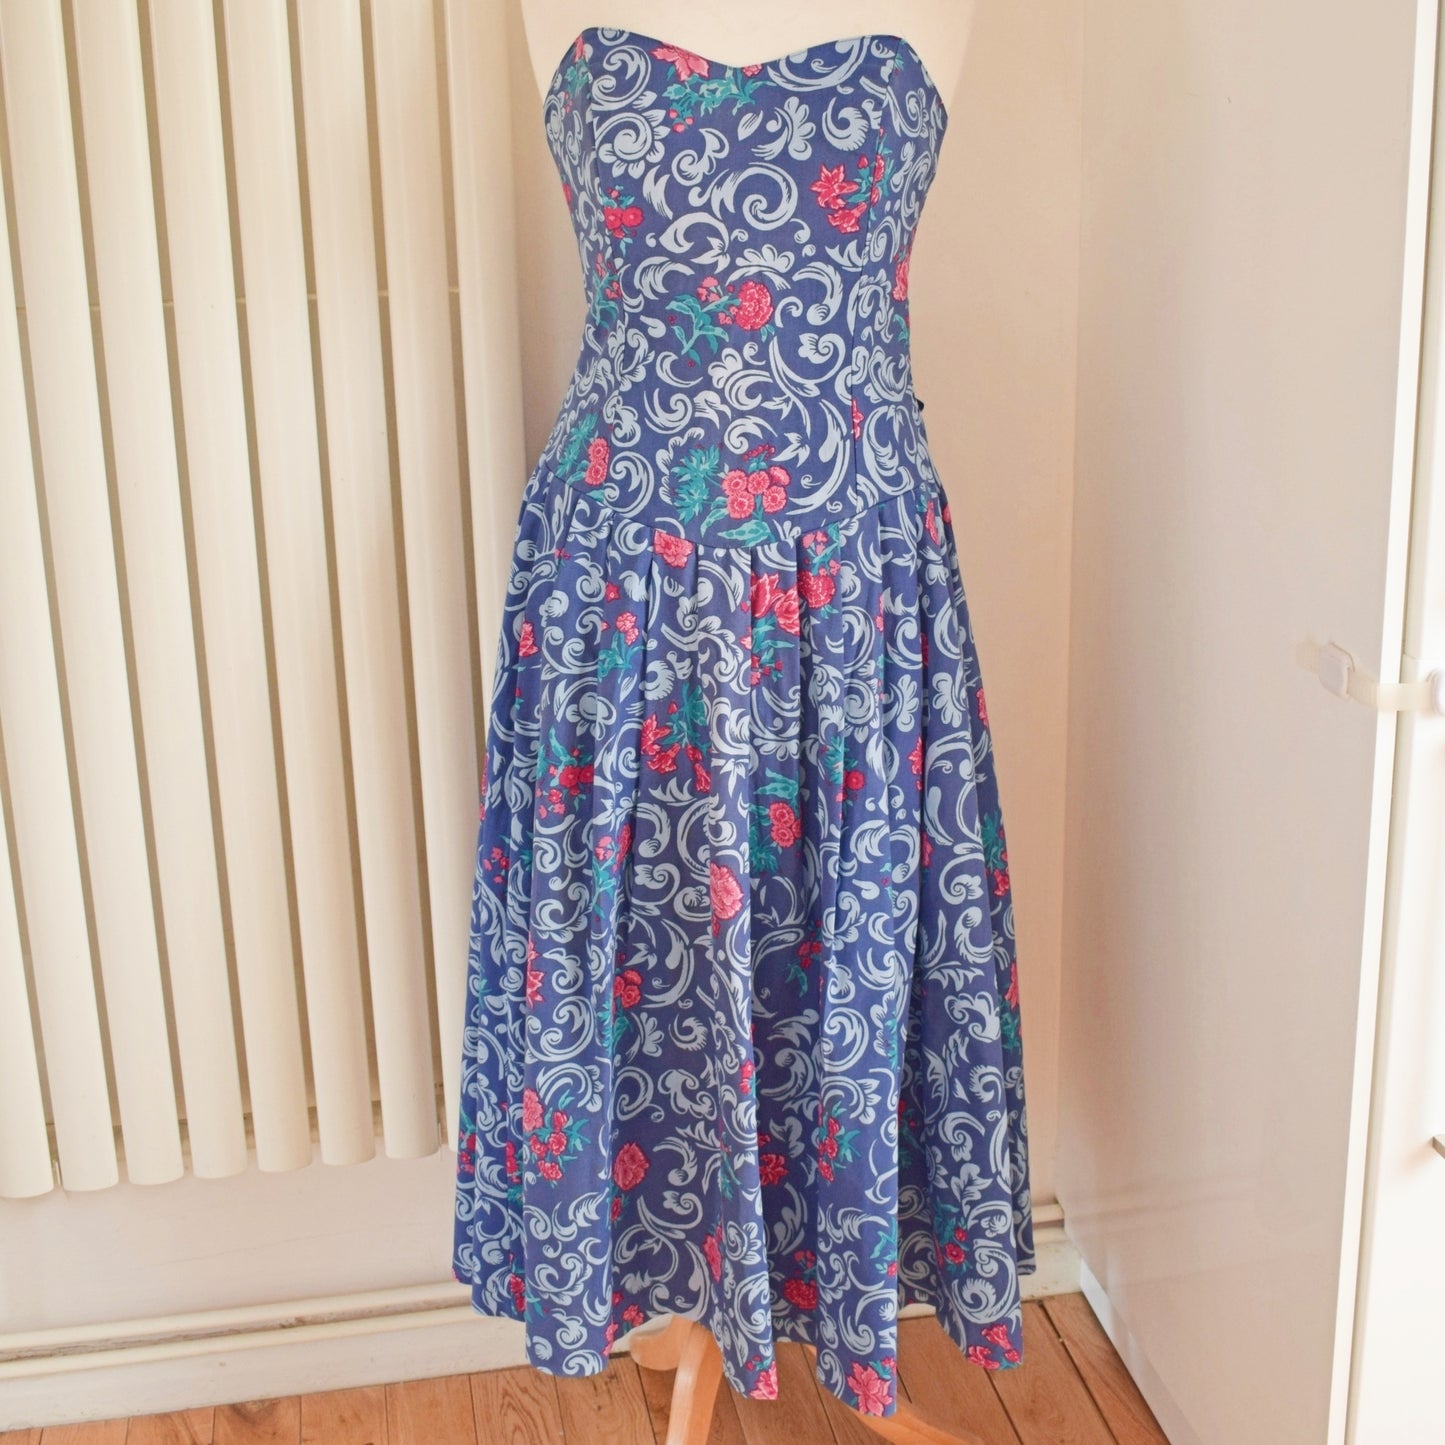 Vintage 1980s Laura Ashley Strapless Dress - Size 12